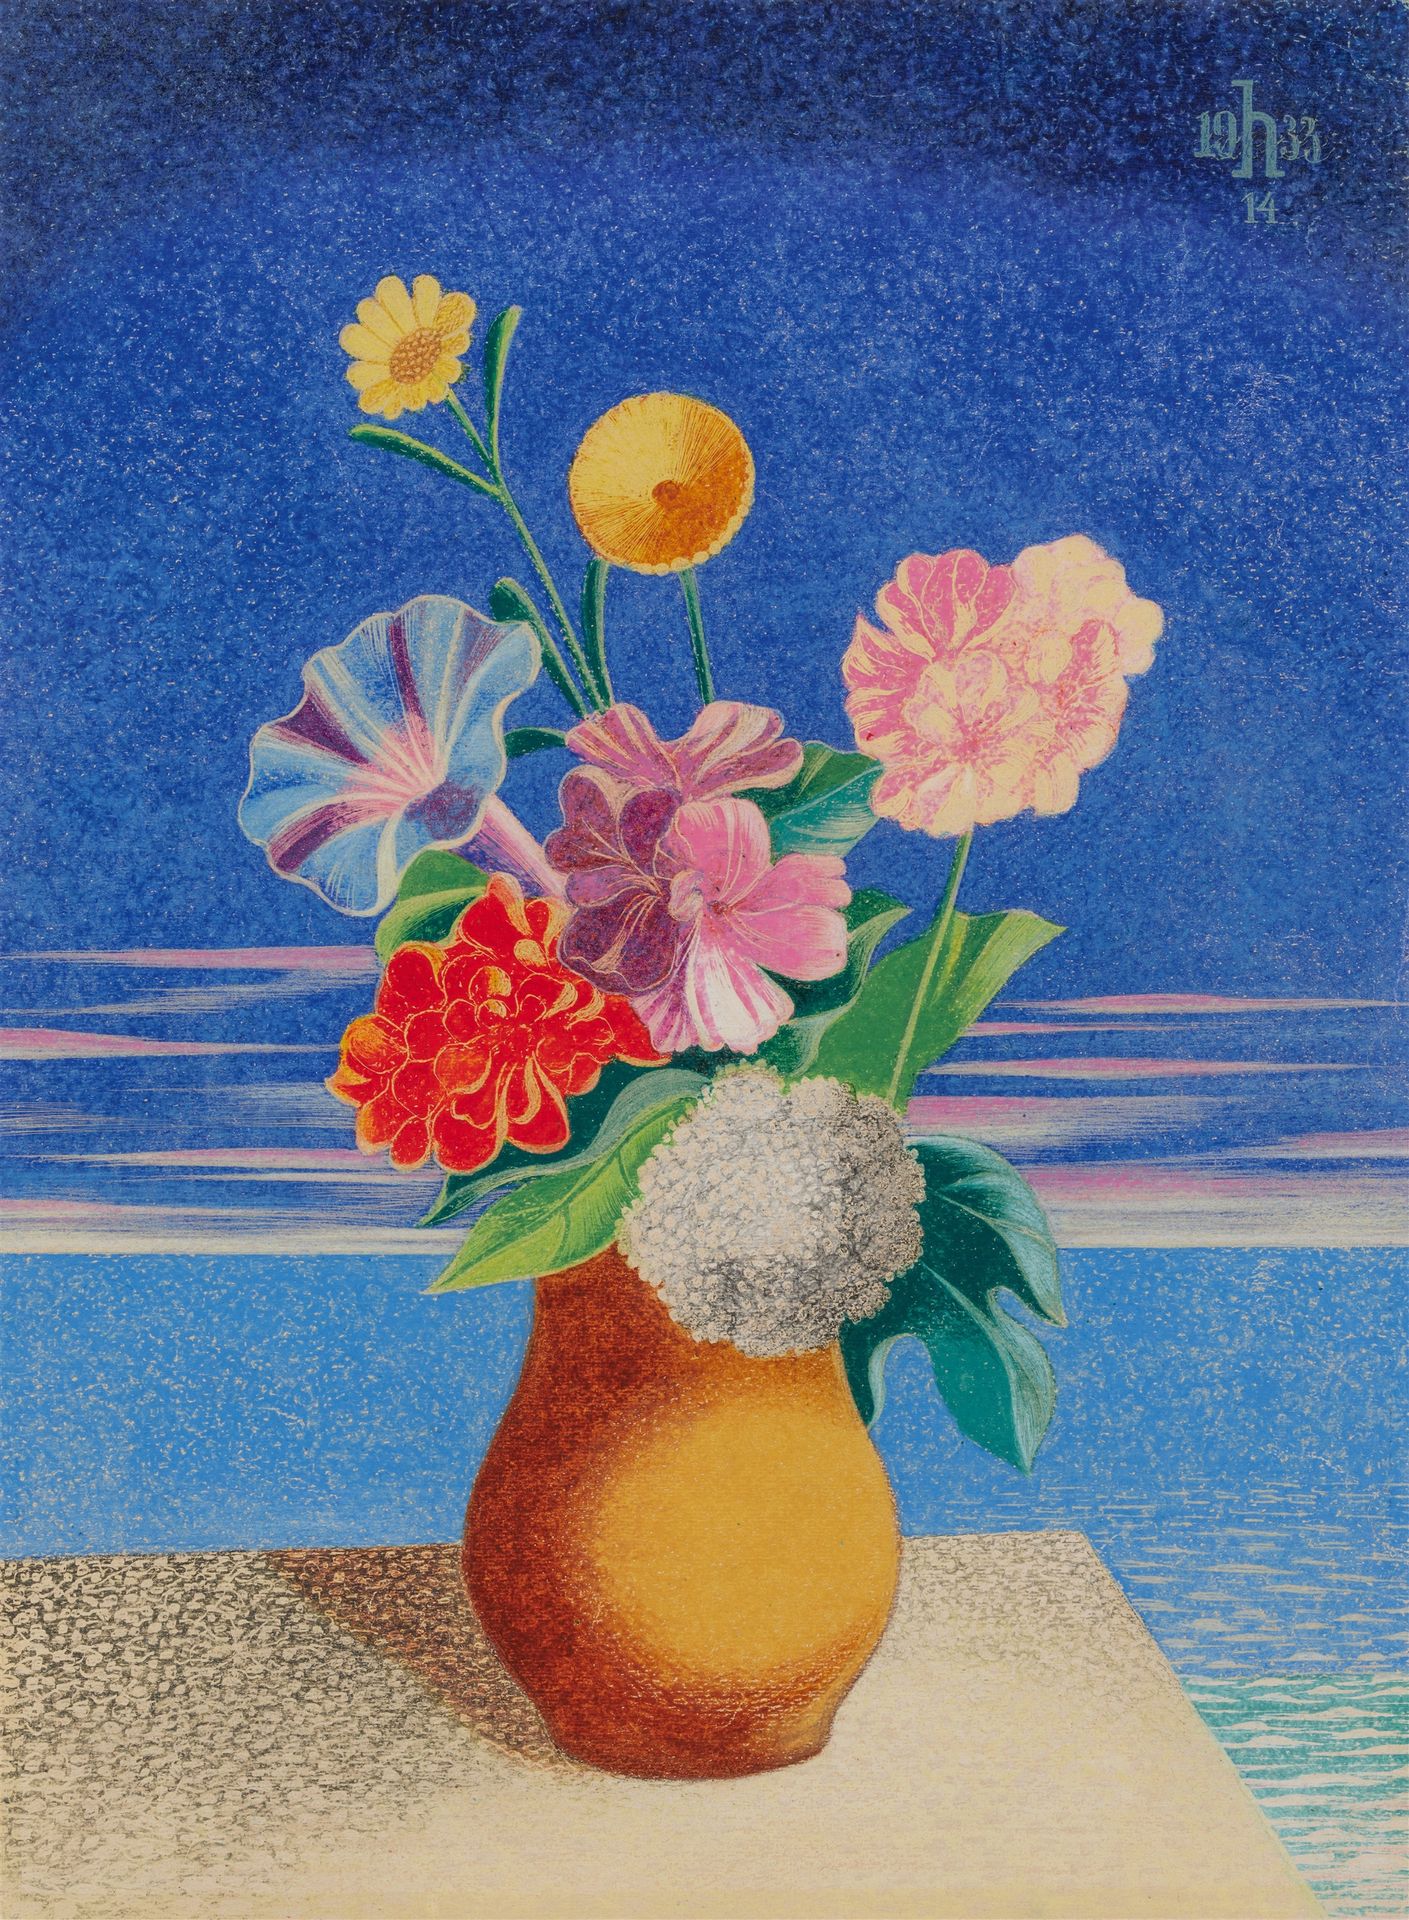 Heinrich Hoerle Heinrich Hoerle

Flowers
1933

Wax crayon on strong paper, partl&hellip;